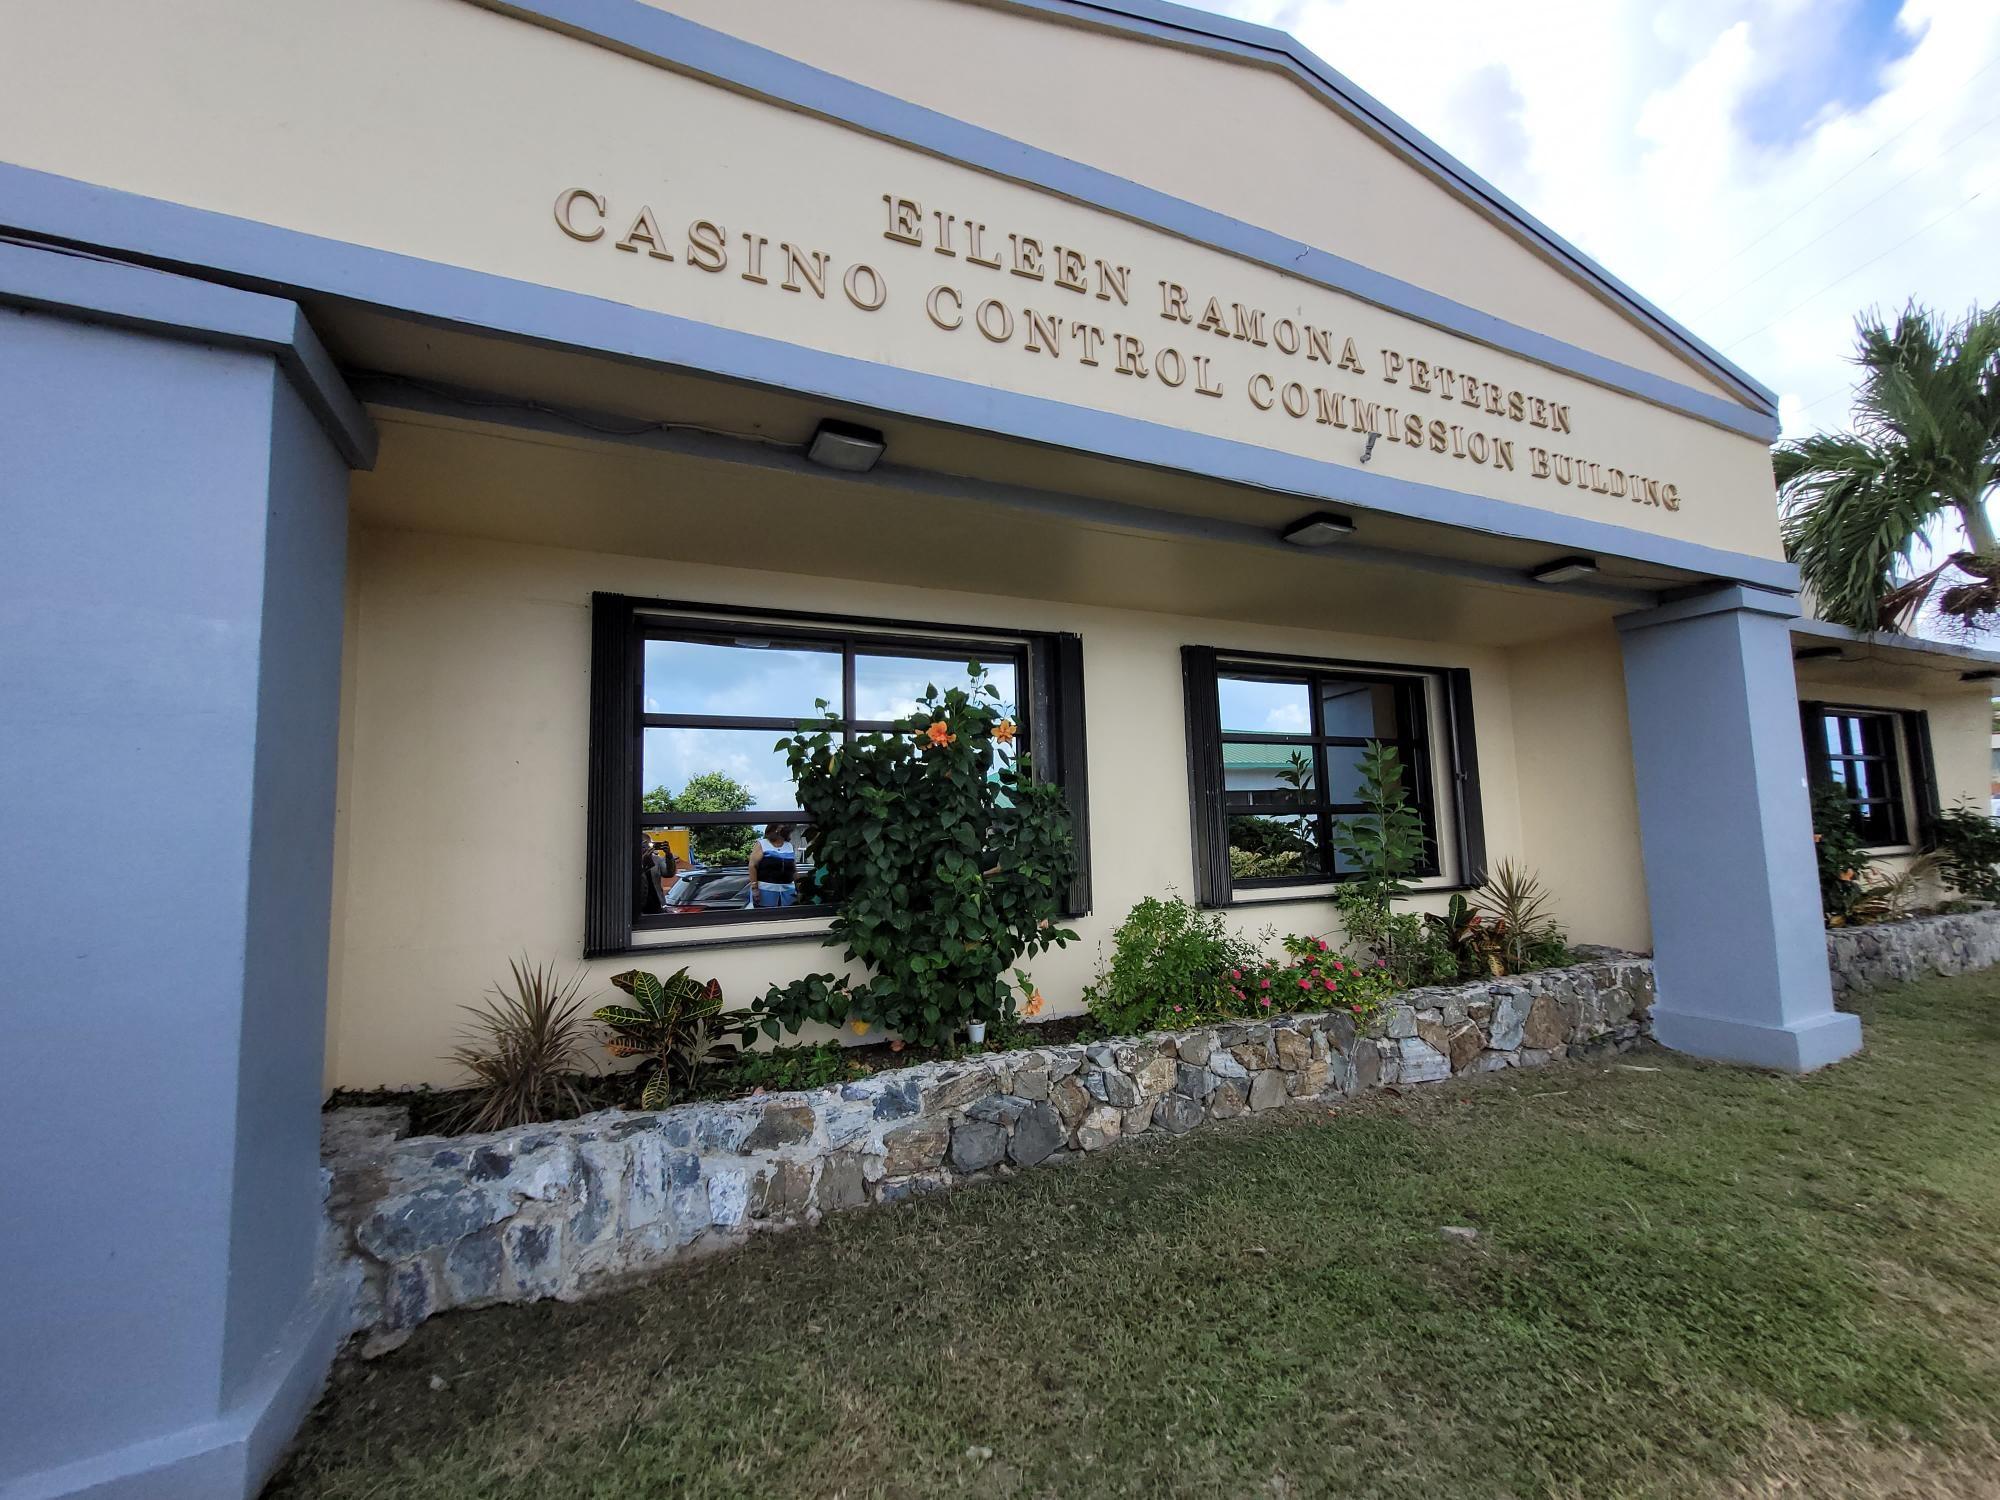 Eileen R. Petersen Casino Control Commission Building